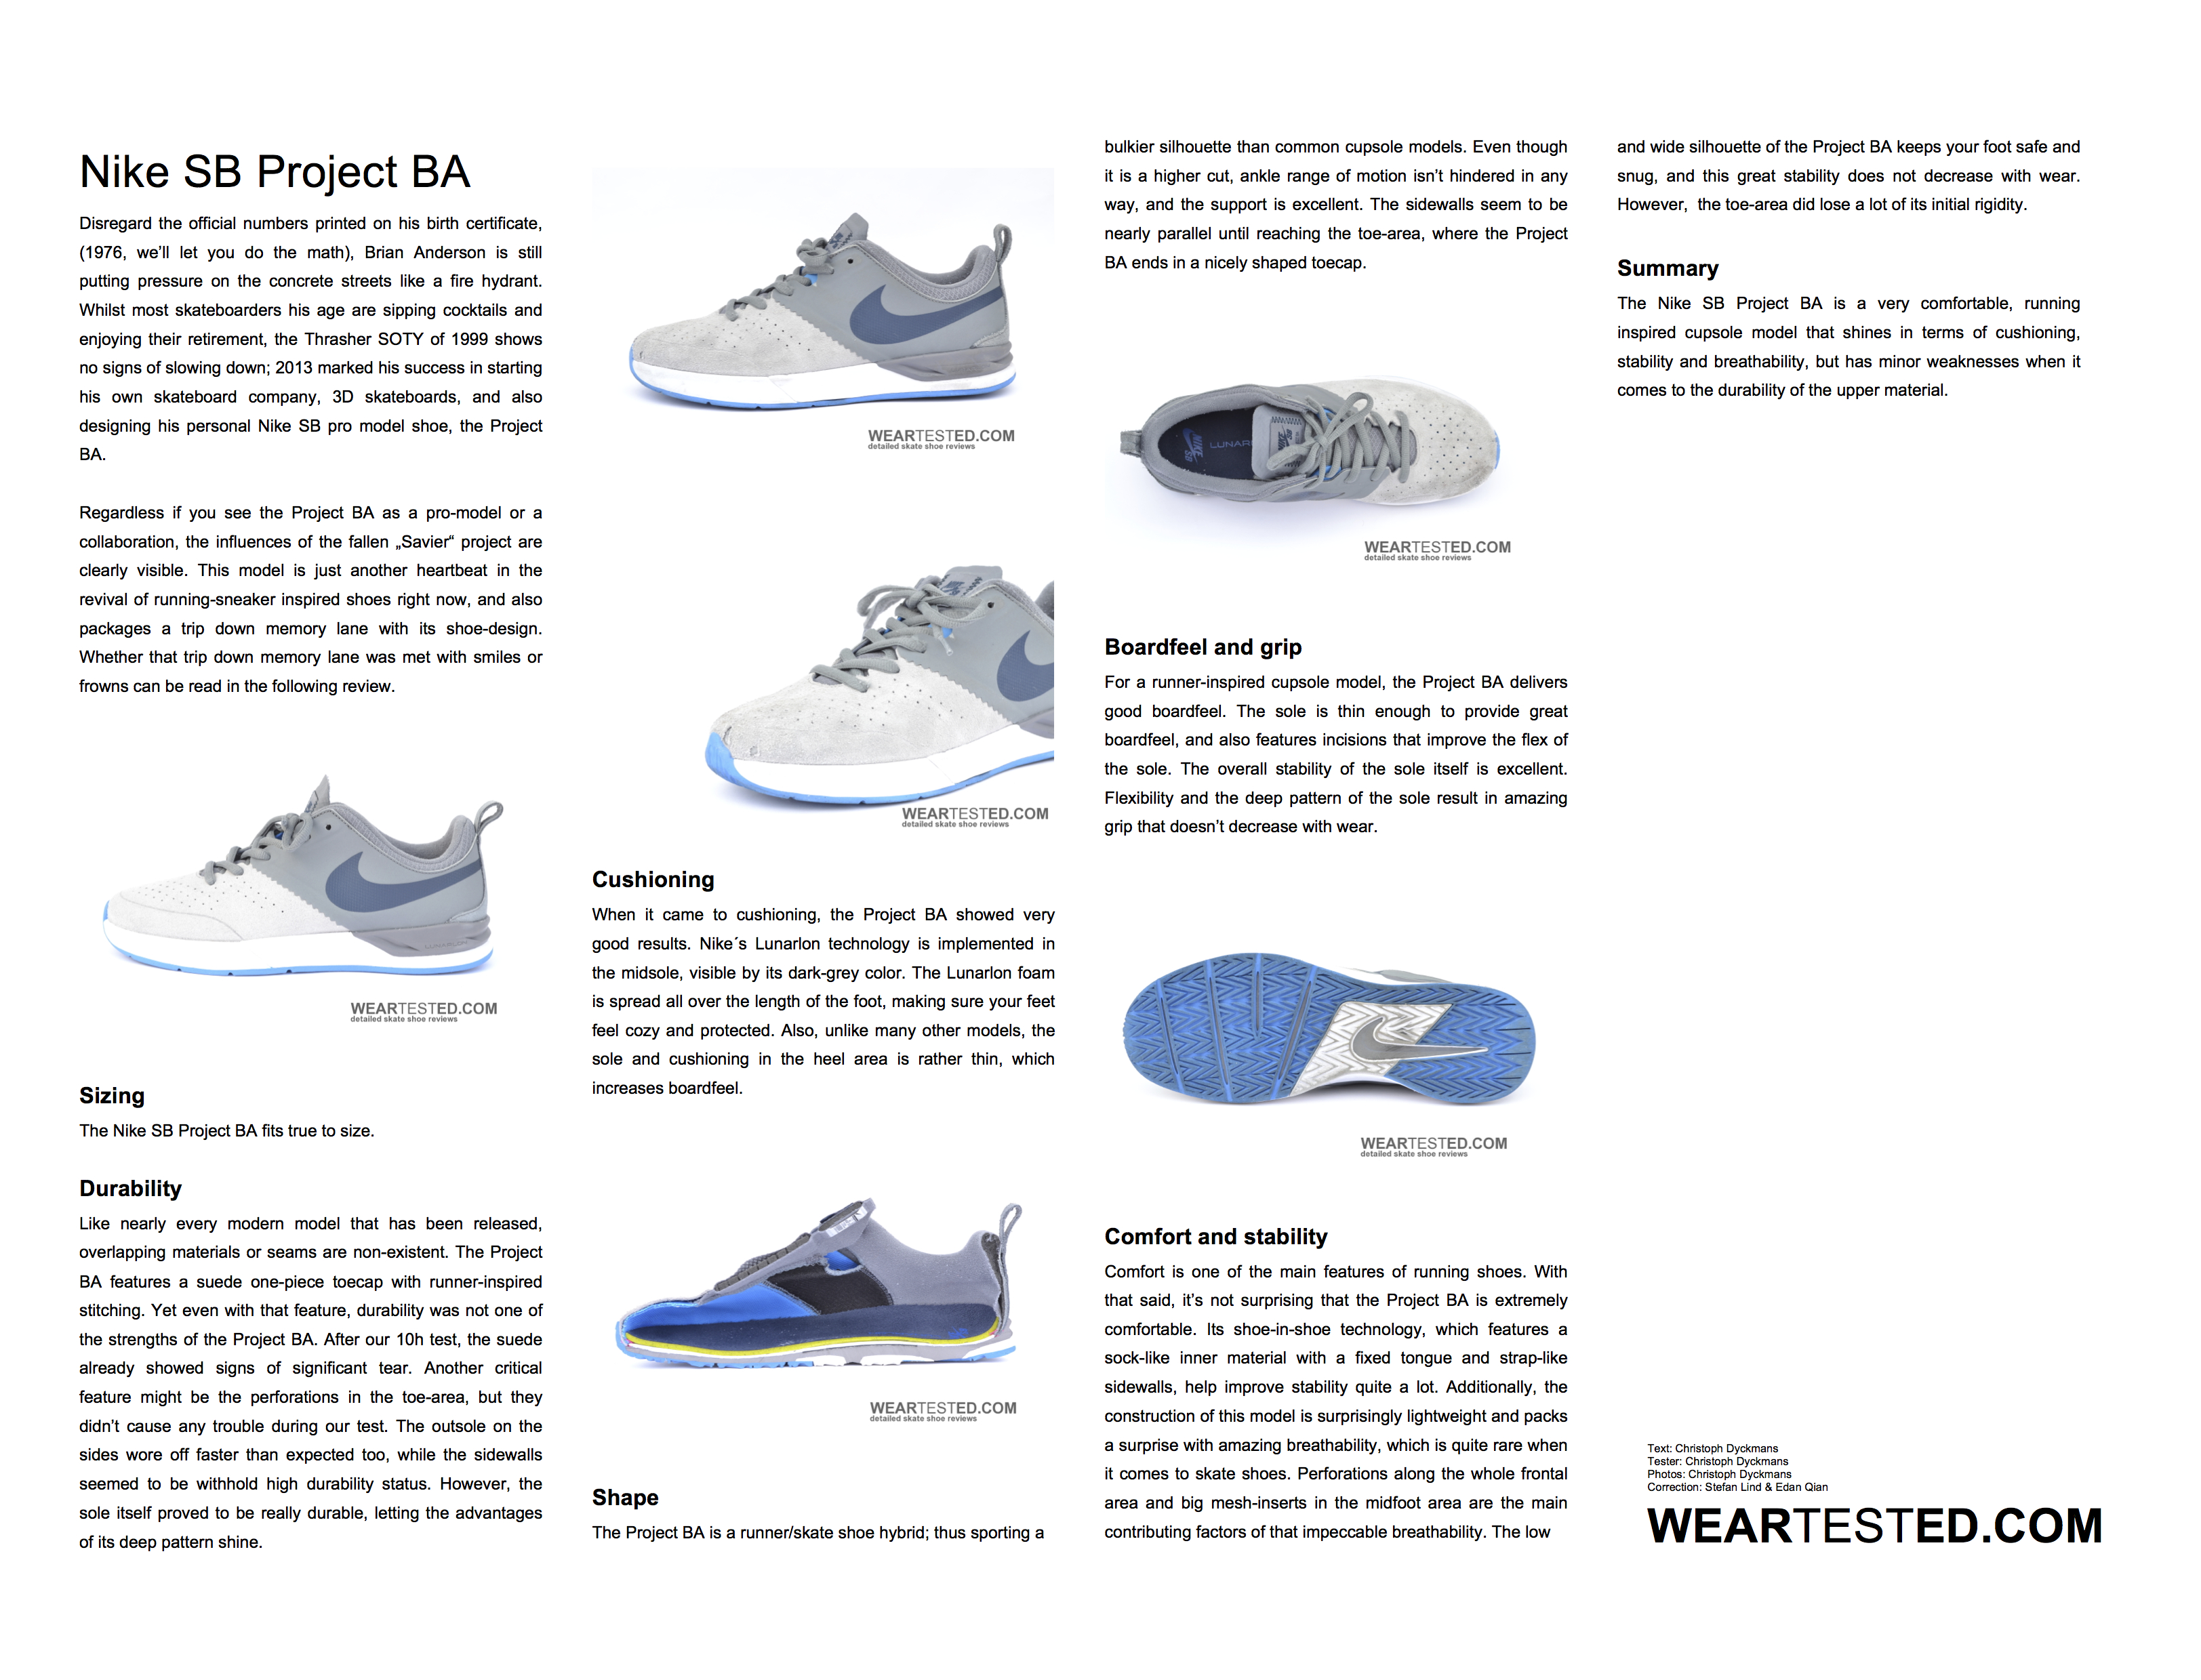 Nike SB Project BA - detailed shoe